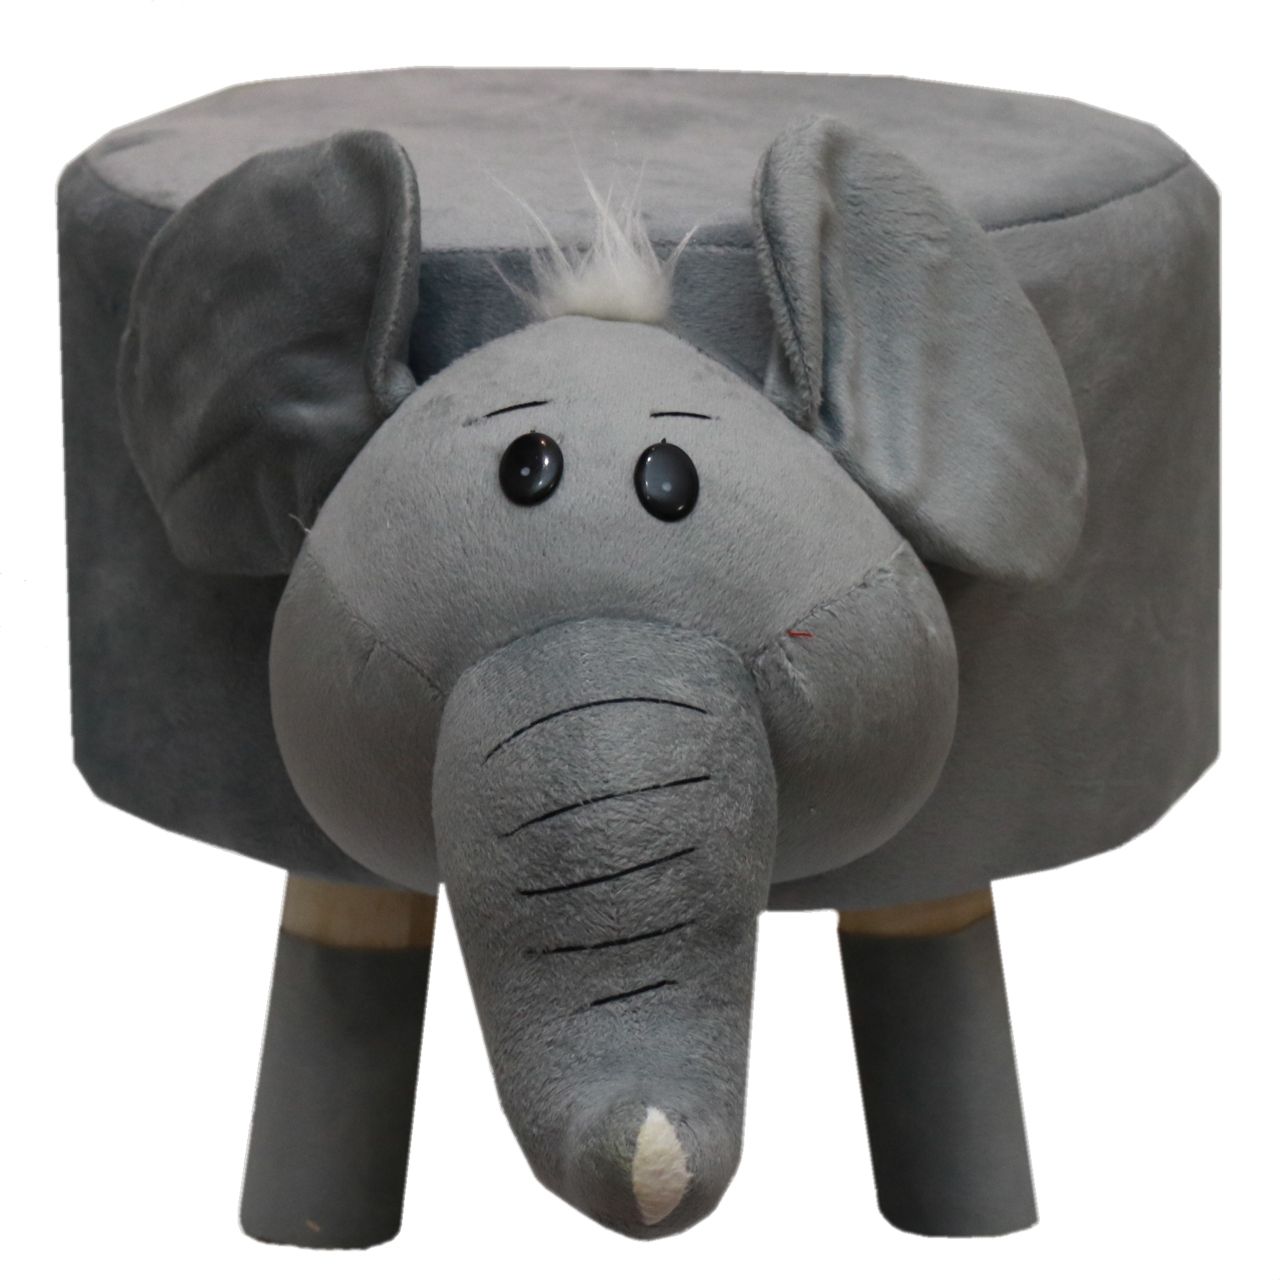 پاف کودک مدل فیل -  - 1